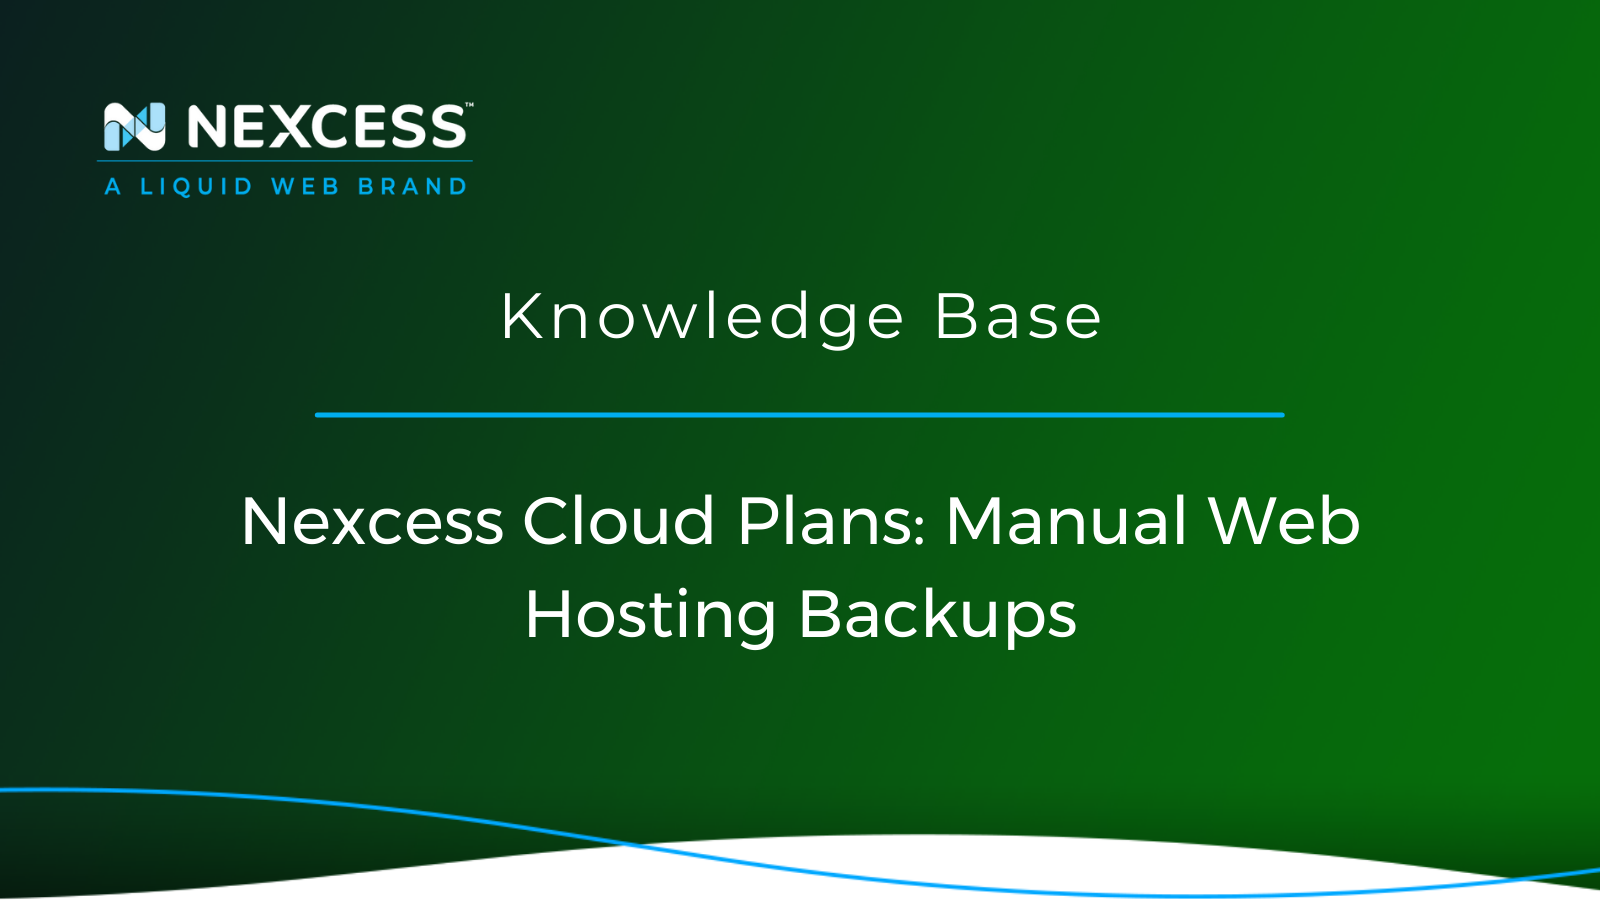 Nexcess Cloud Plans: Manual Web Hosting Backups